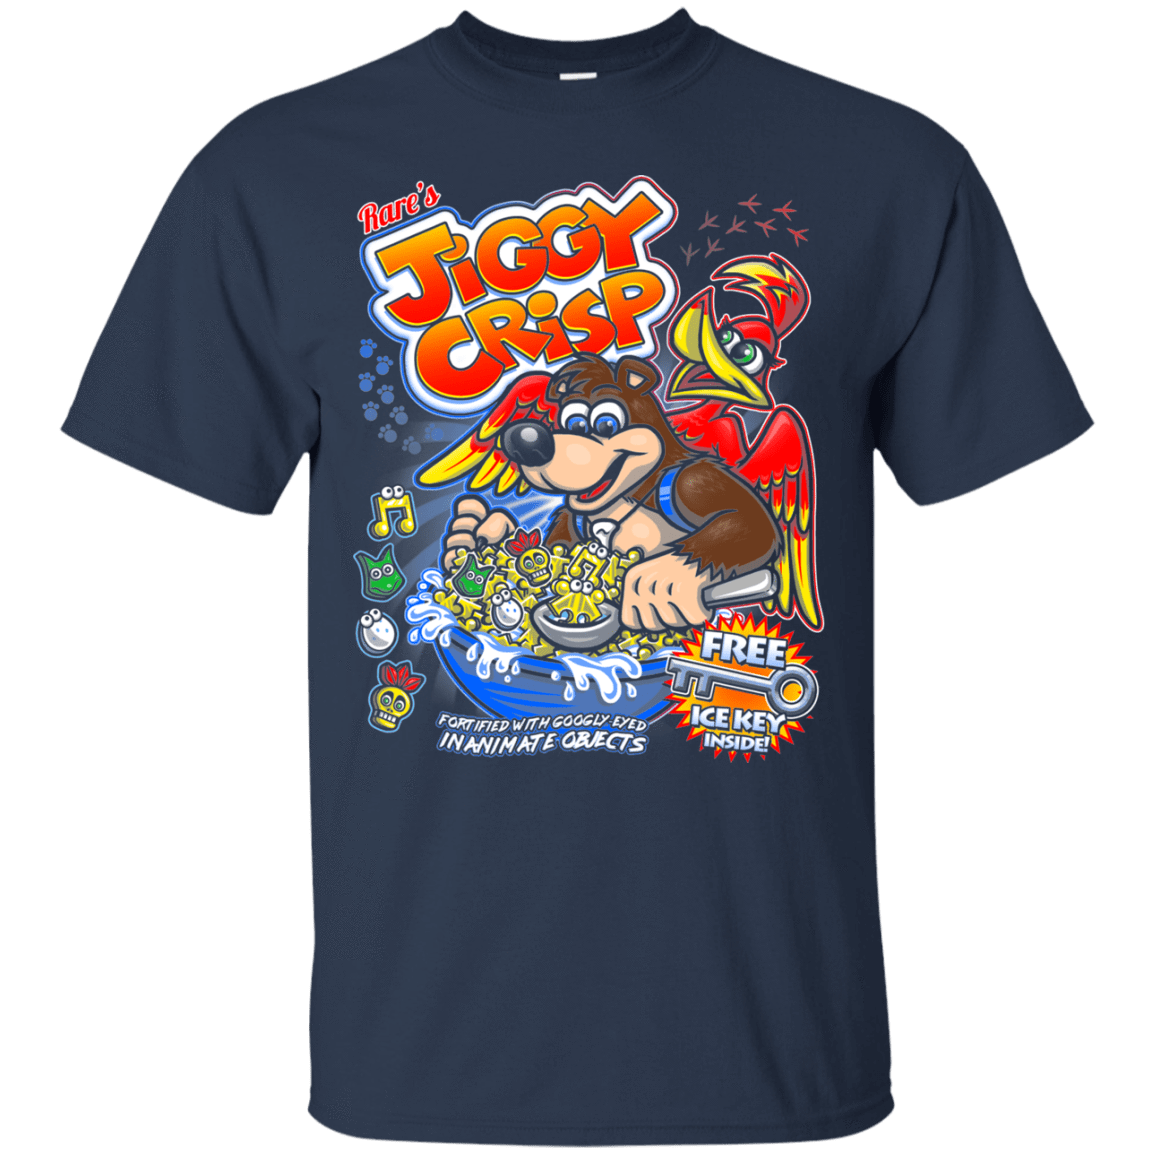 T-Shirts Navy / S Jiggy Crisp Cereal T-Shirt